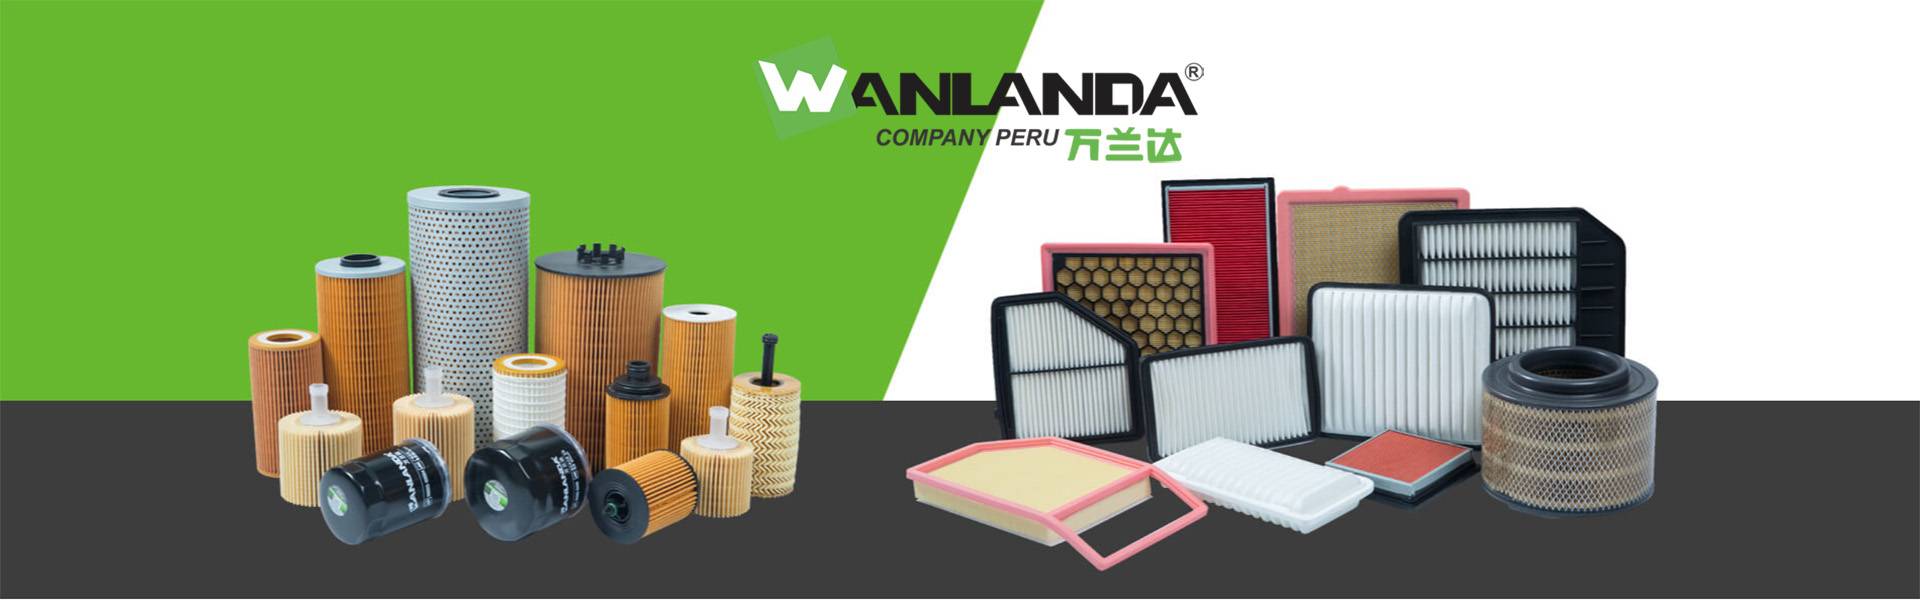 Filtro de aire A-1127U WANLANDA – Wanlanda Company Peru